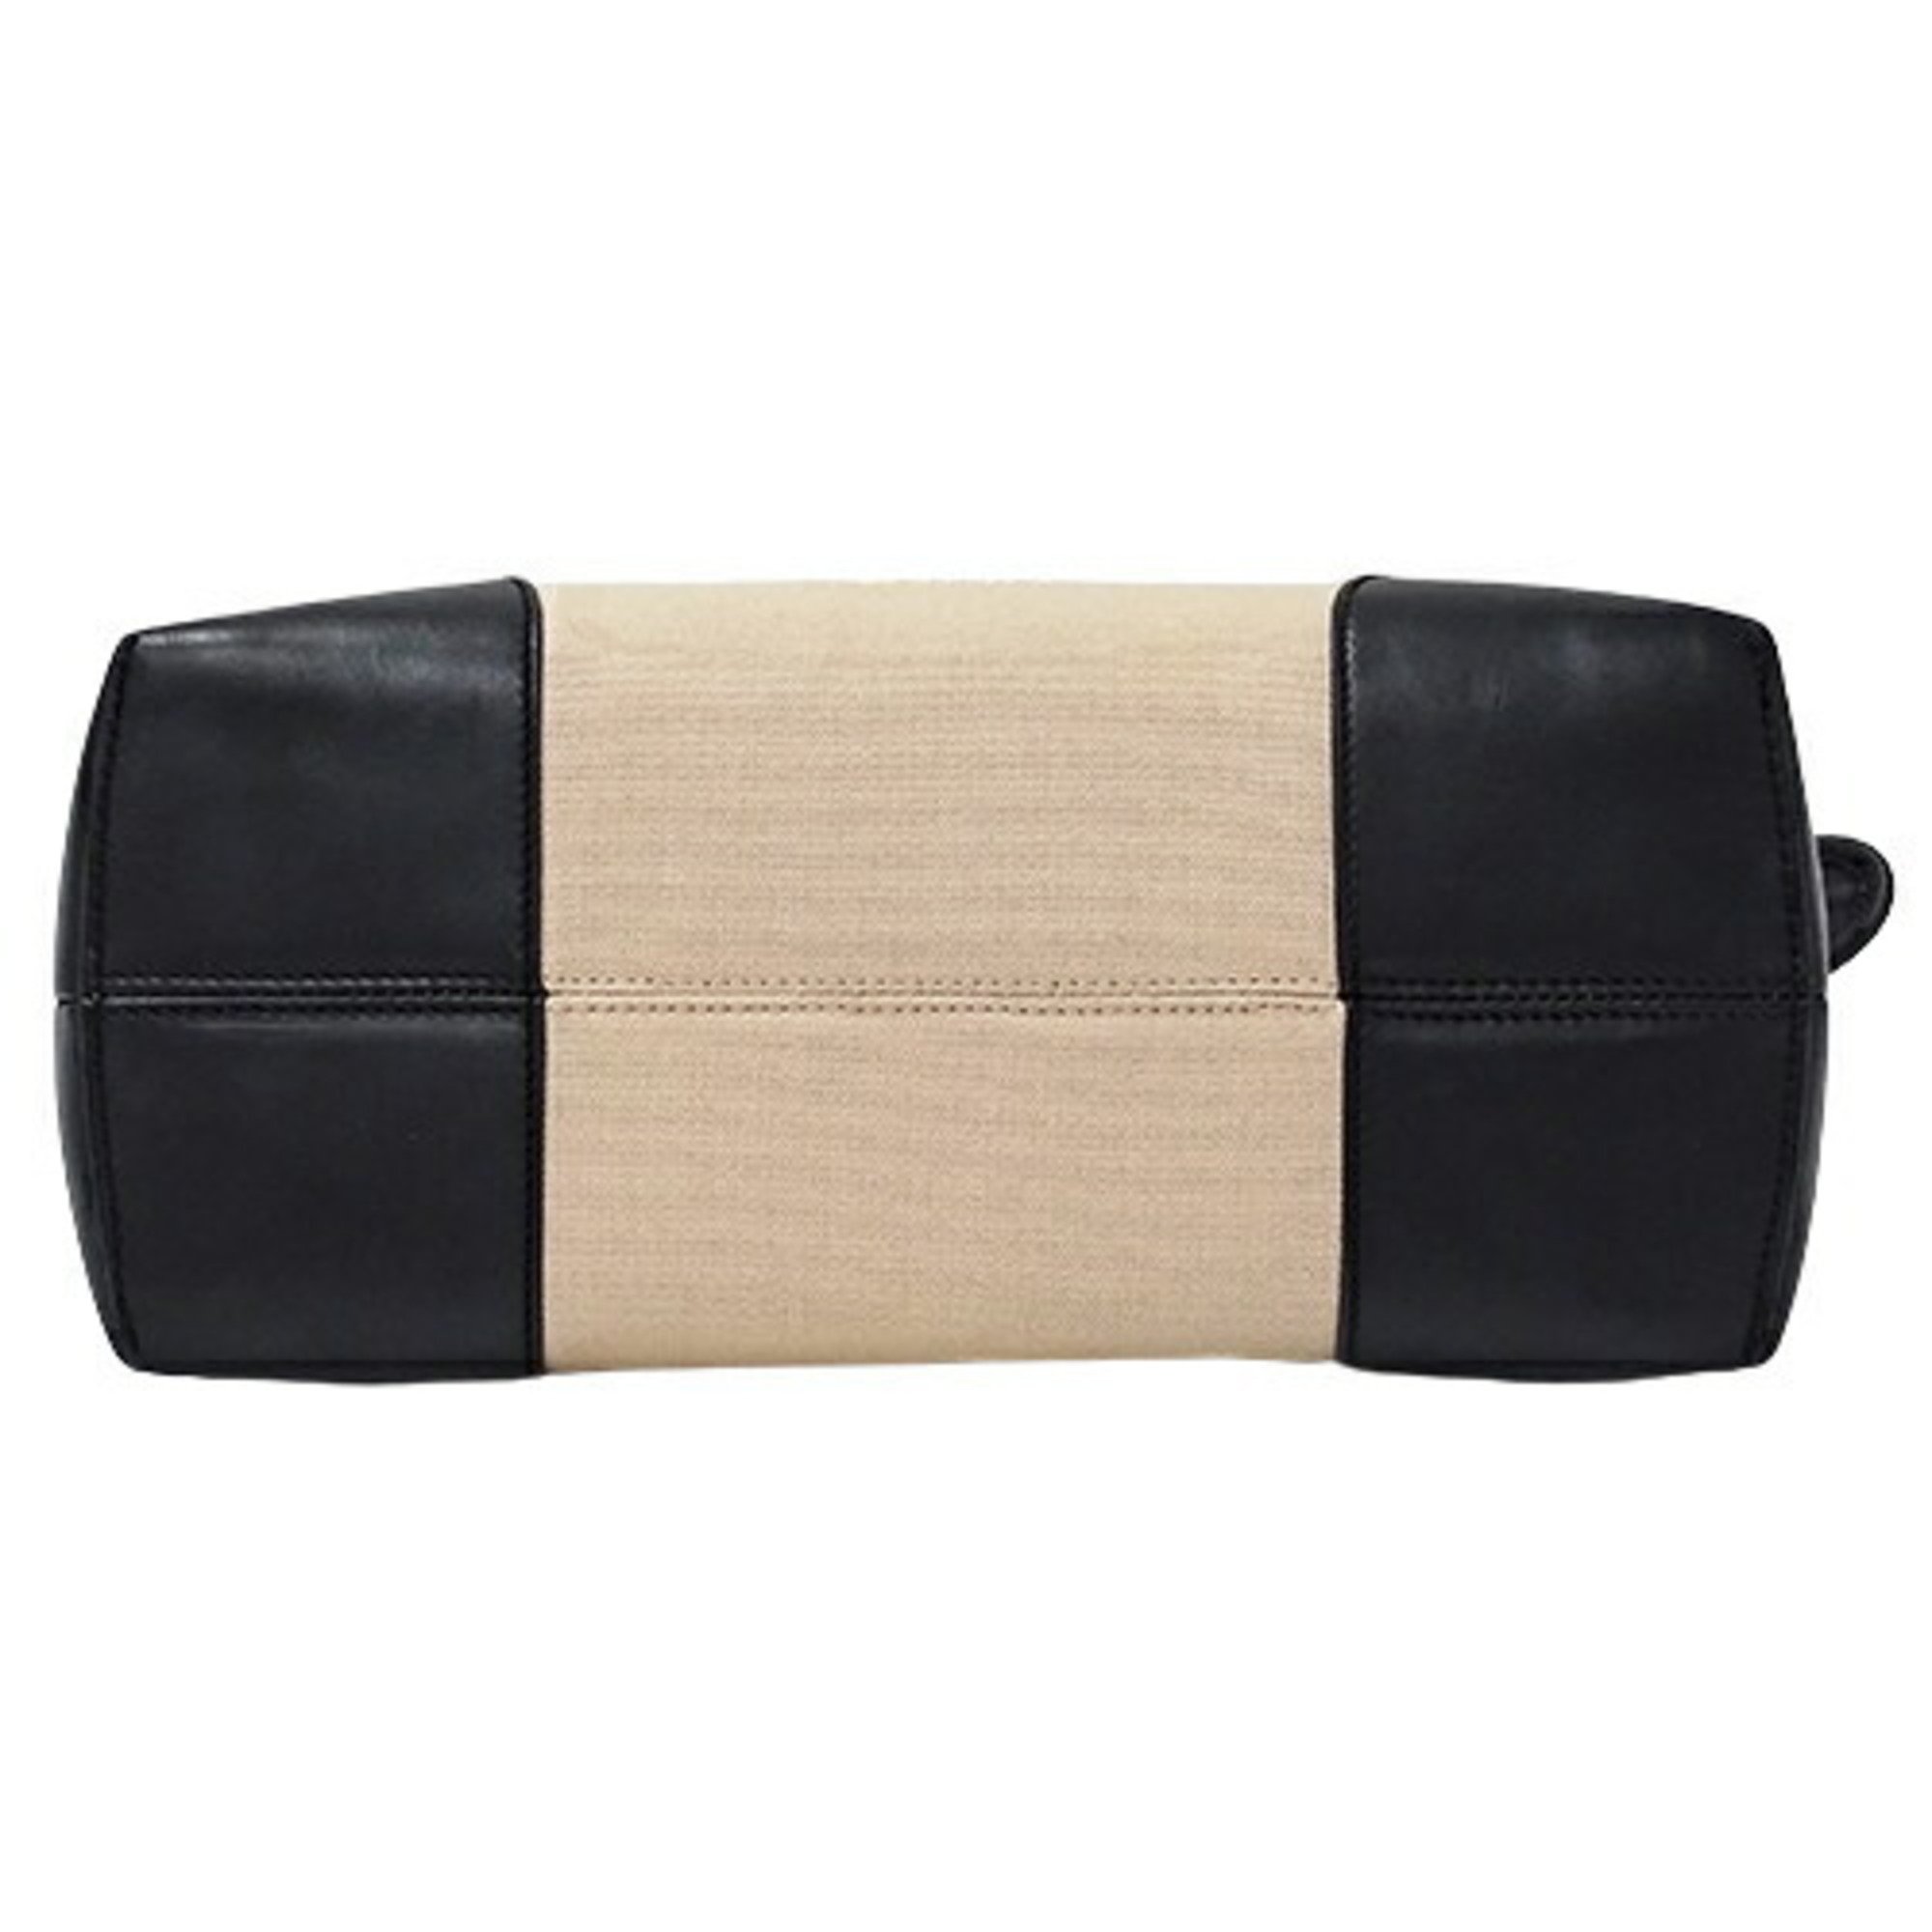 FENDI Bag Women's Handbag Shoulder 2way Visible Medium Canvas Leather Pink Beige Black 8BL146 Bicolor Crossbody